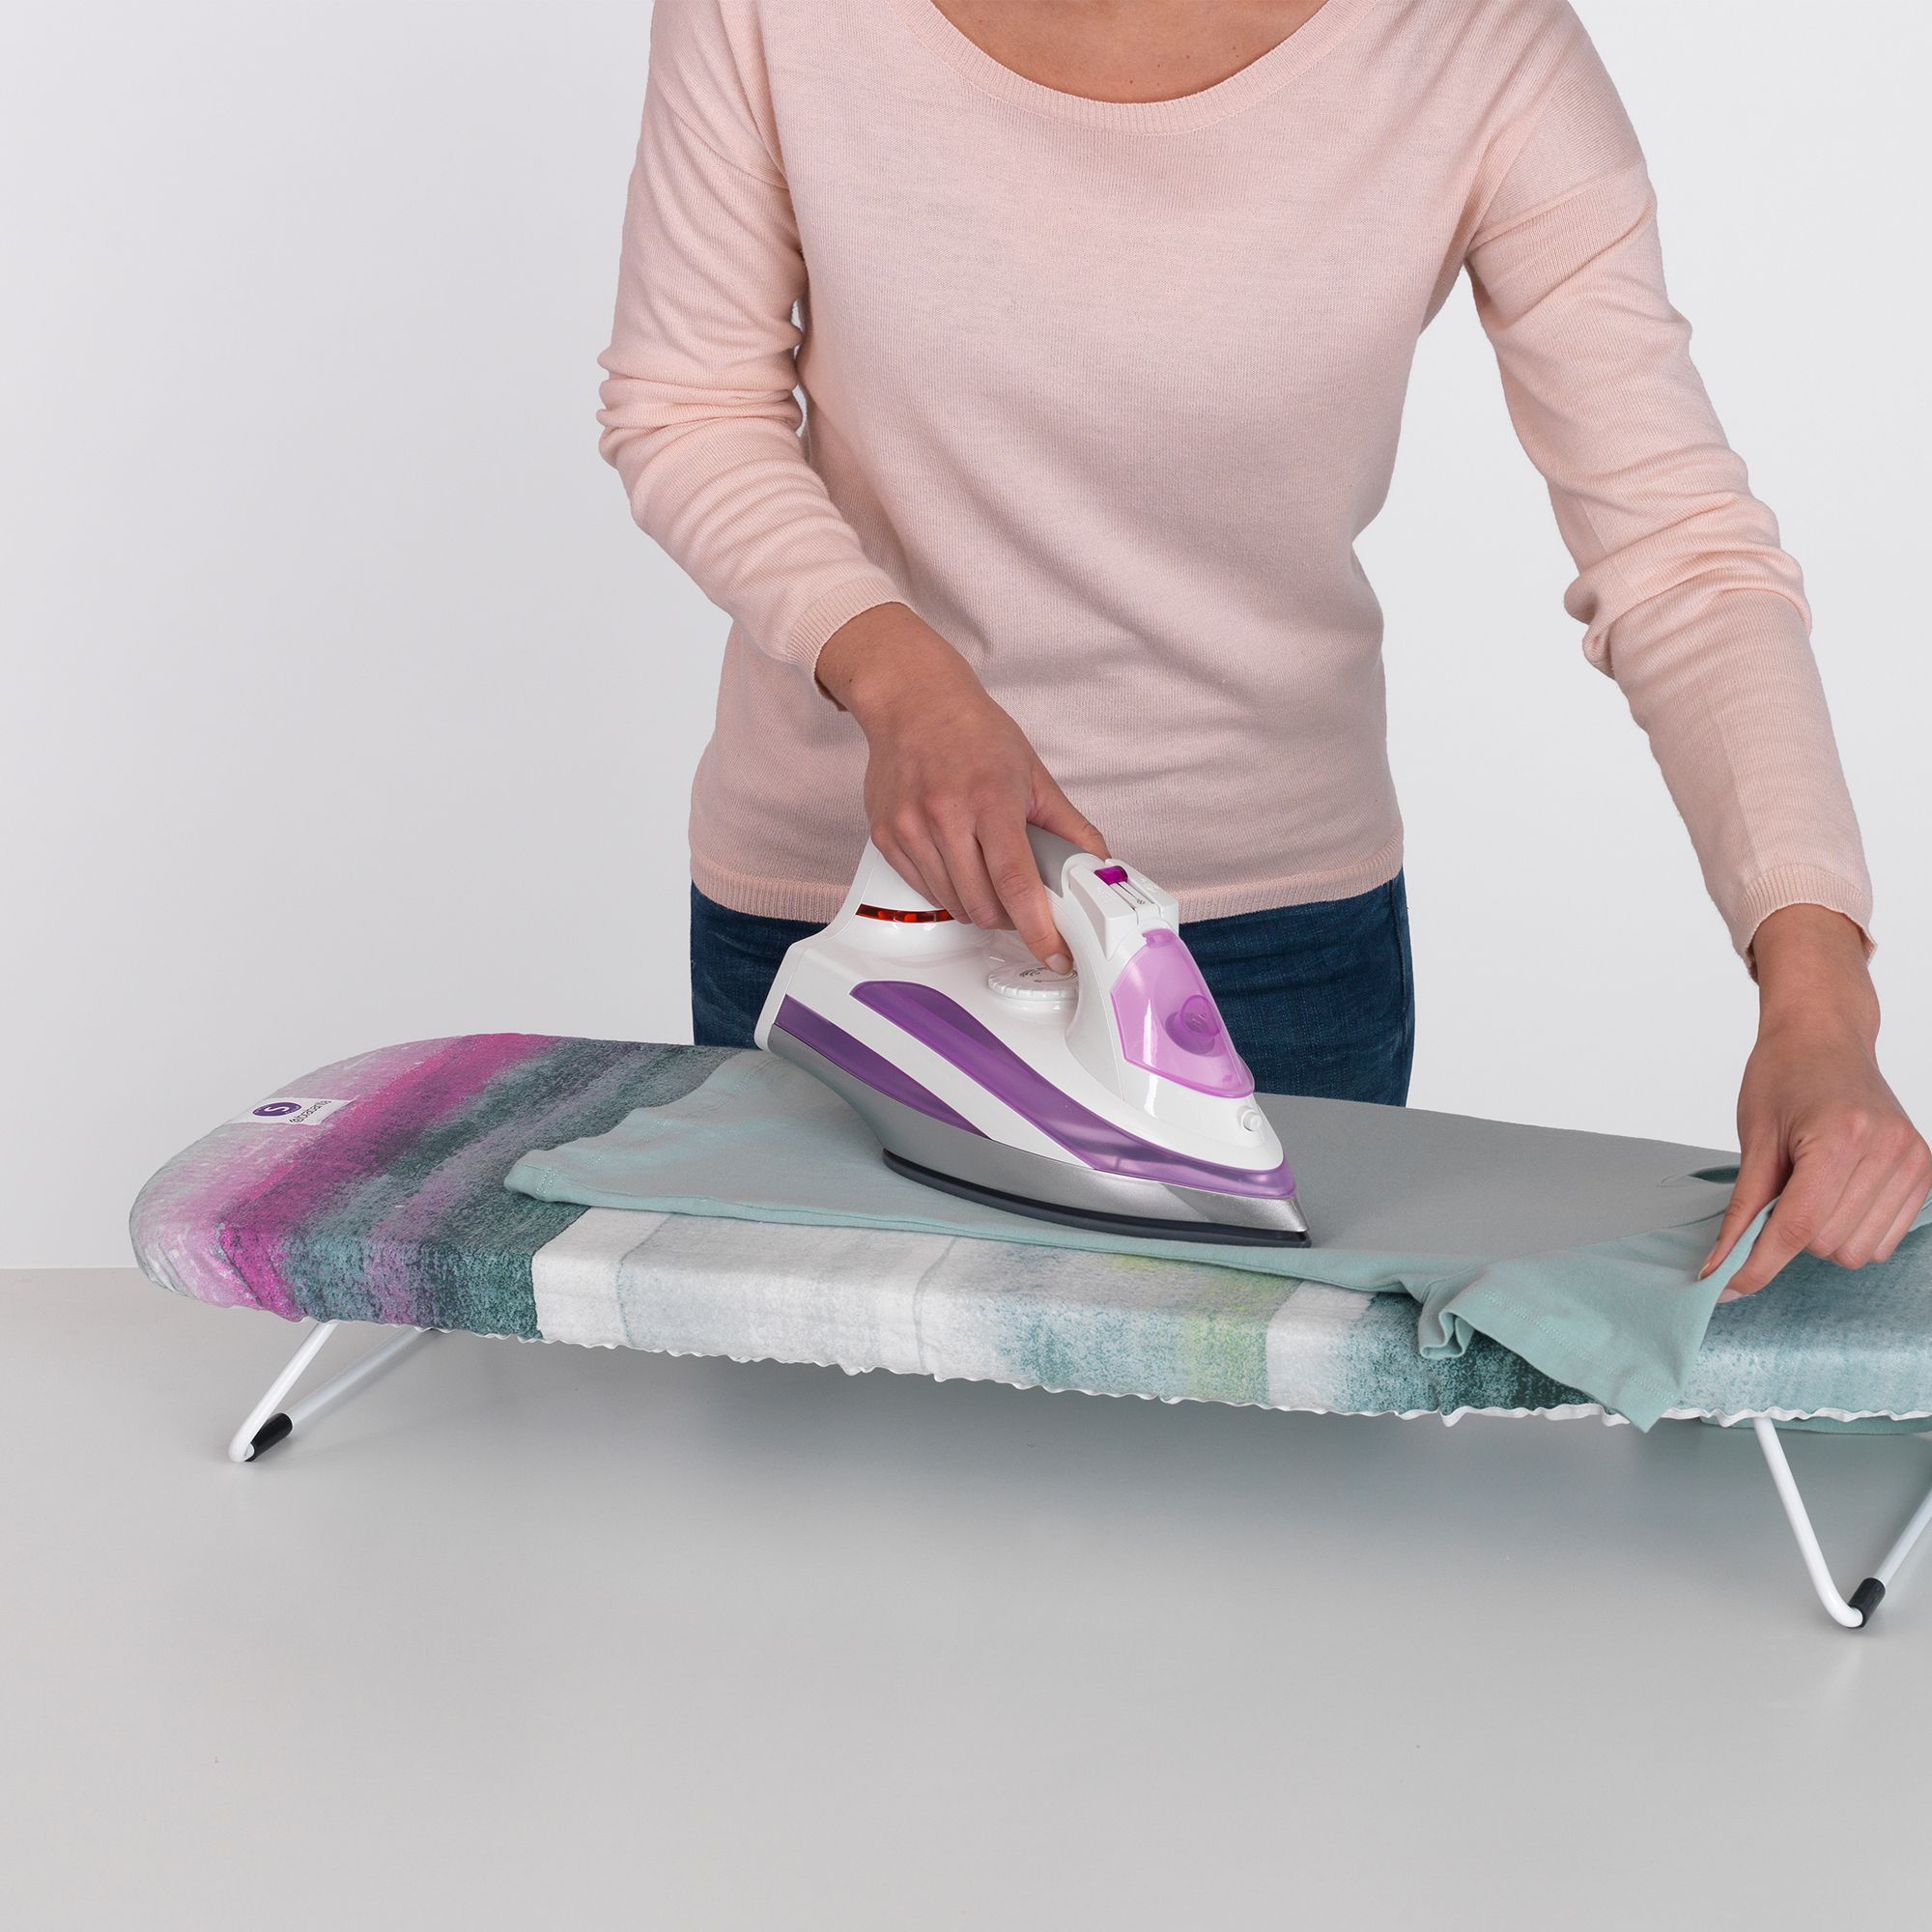 Brabantia Morning breeze Table top ironing board 950mm x 300mm